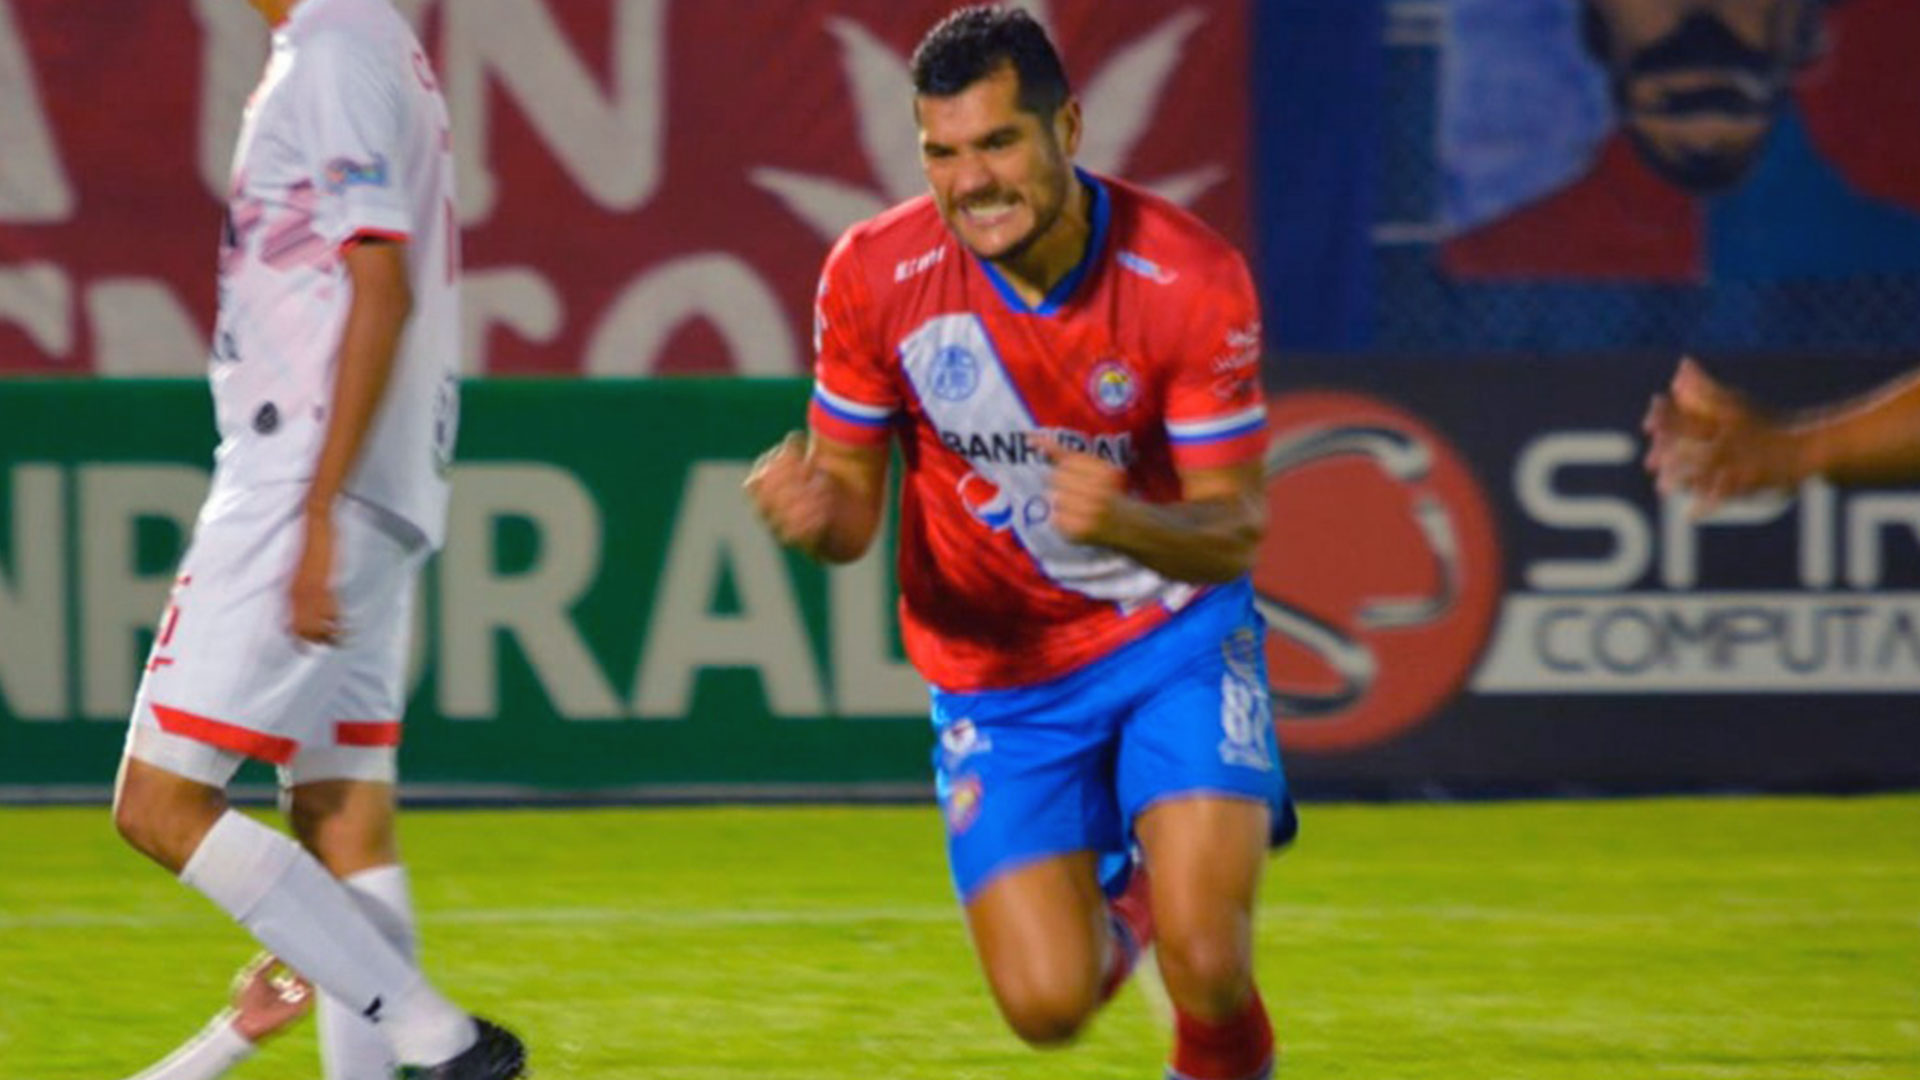 Javier Orozco durante la celebración de su primer gol en la Liga Nacional. (Foto Prensa Libre: Xelajú MC Twitter)